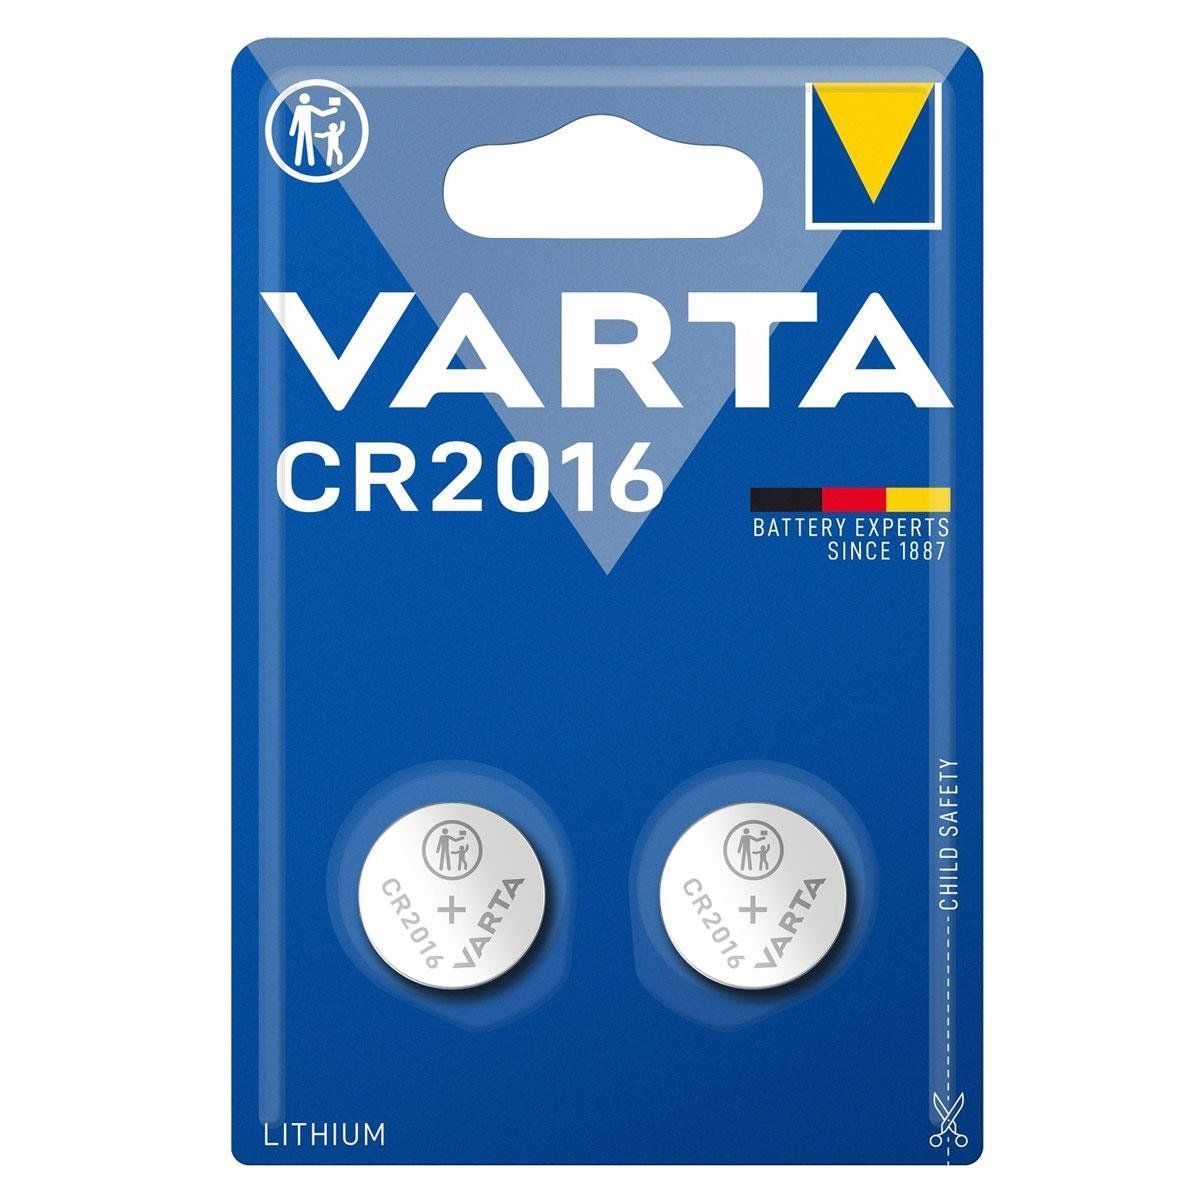 Varta CR2016 3V Lityum Pil 2'li Paket